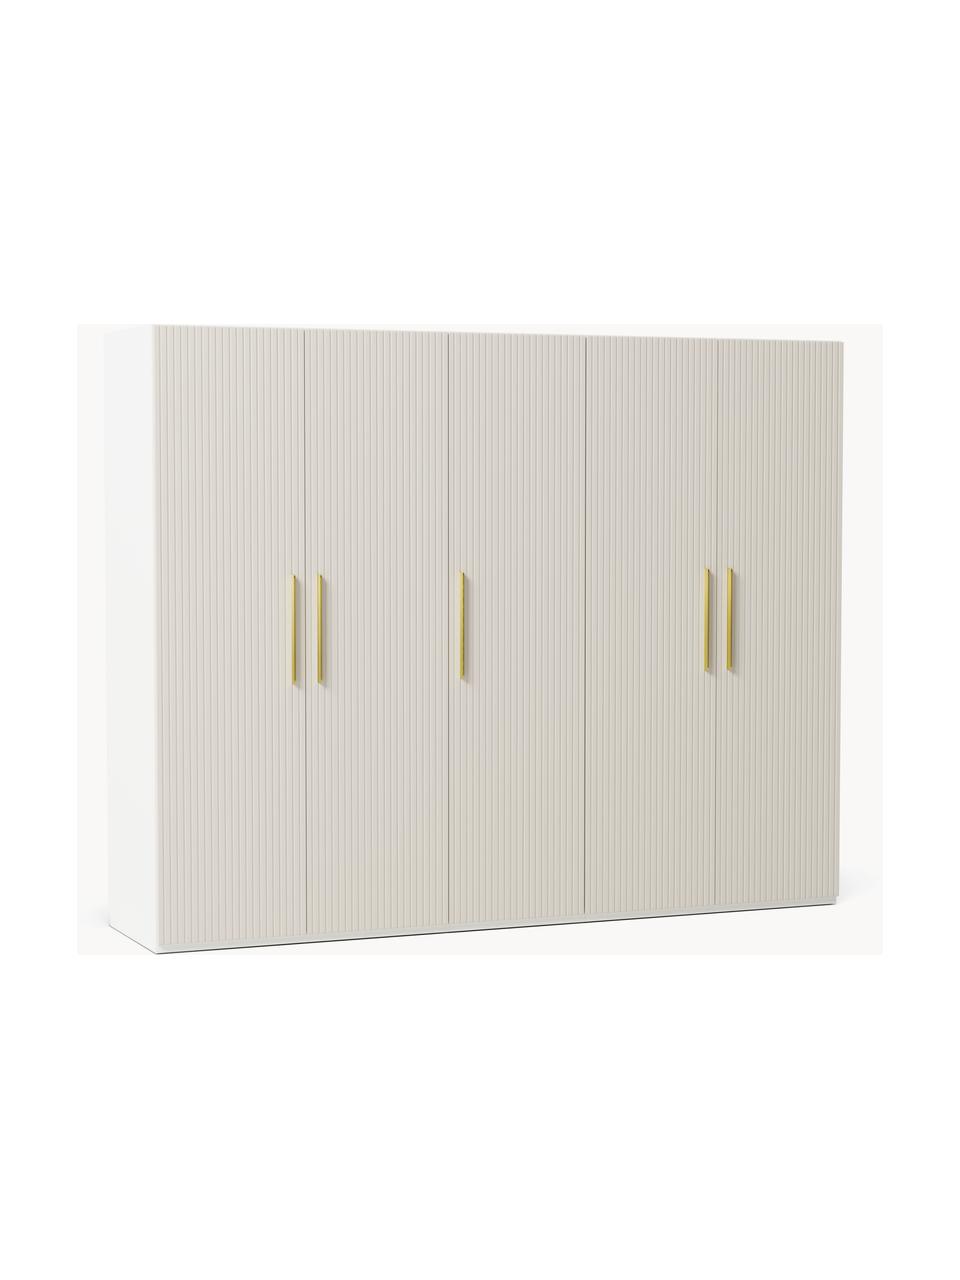 Modulární skříň s otočnými dveřmi Simone, šířka 250 cm, více variant, Dřevo, světle béžová, Interiér Premium, Š 250 x V 200 cm